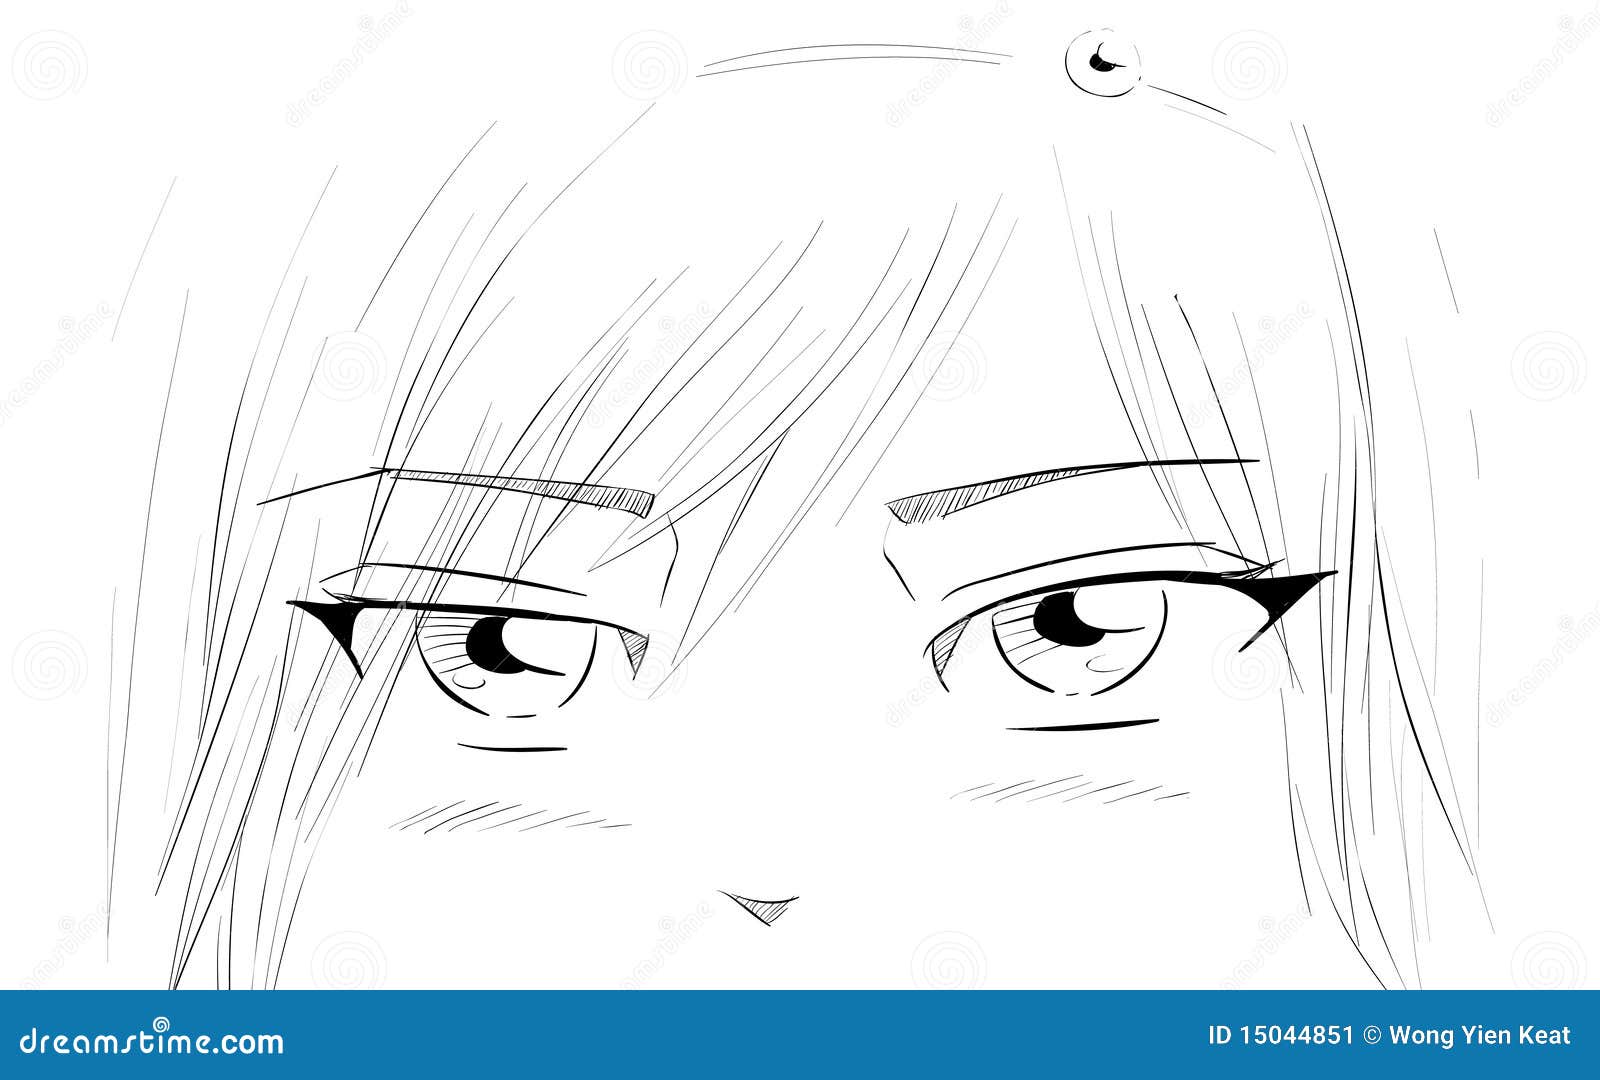 Anime Drawing Tutorials [100k+] on Instagram: 